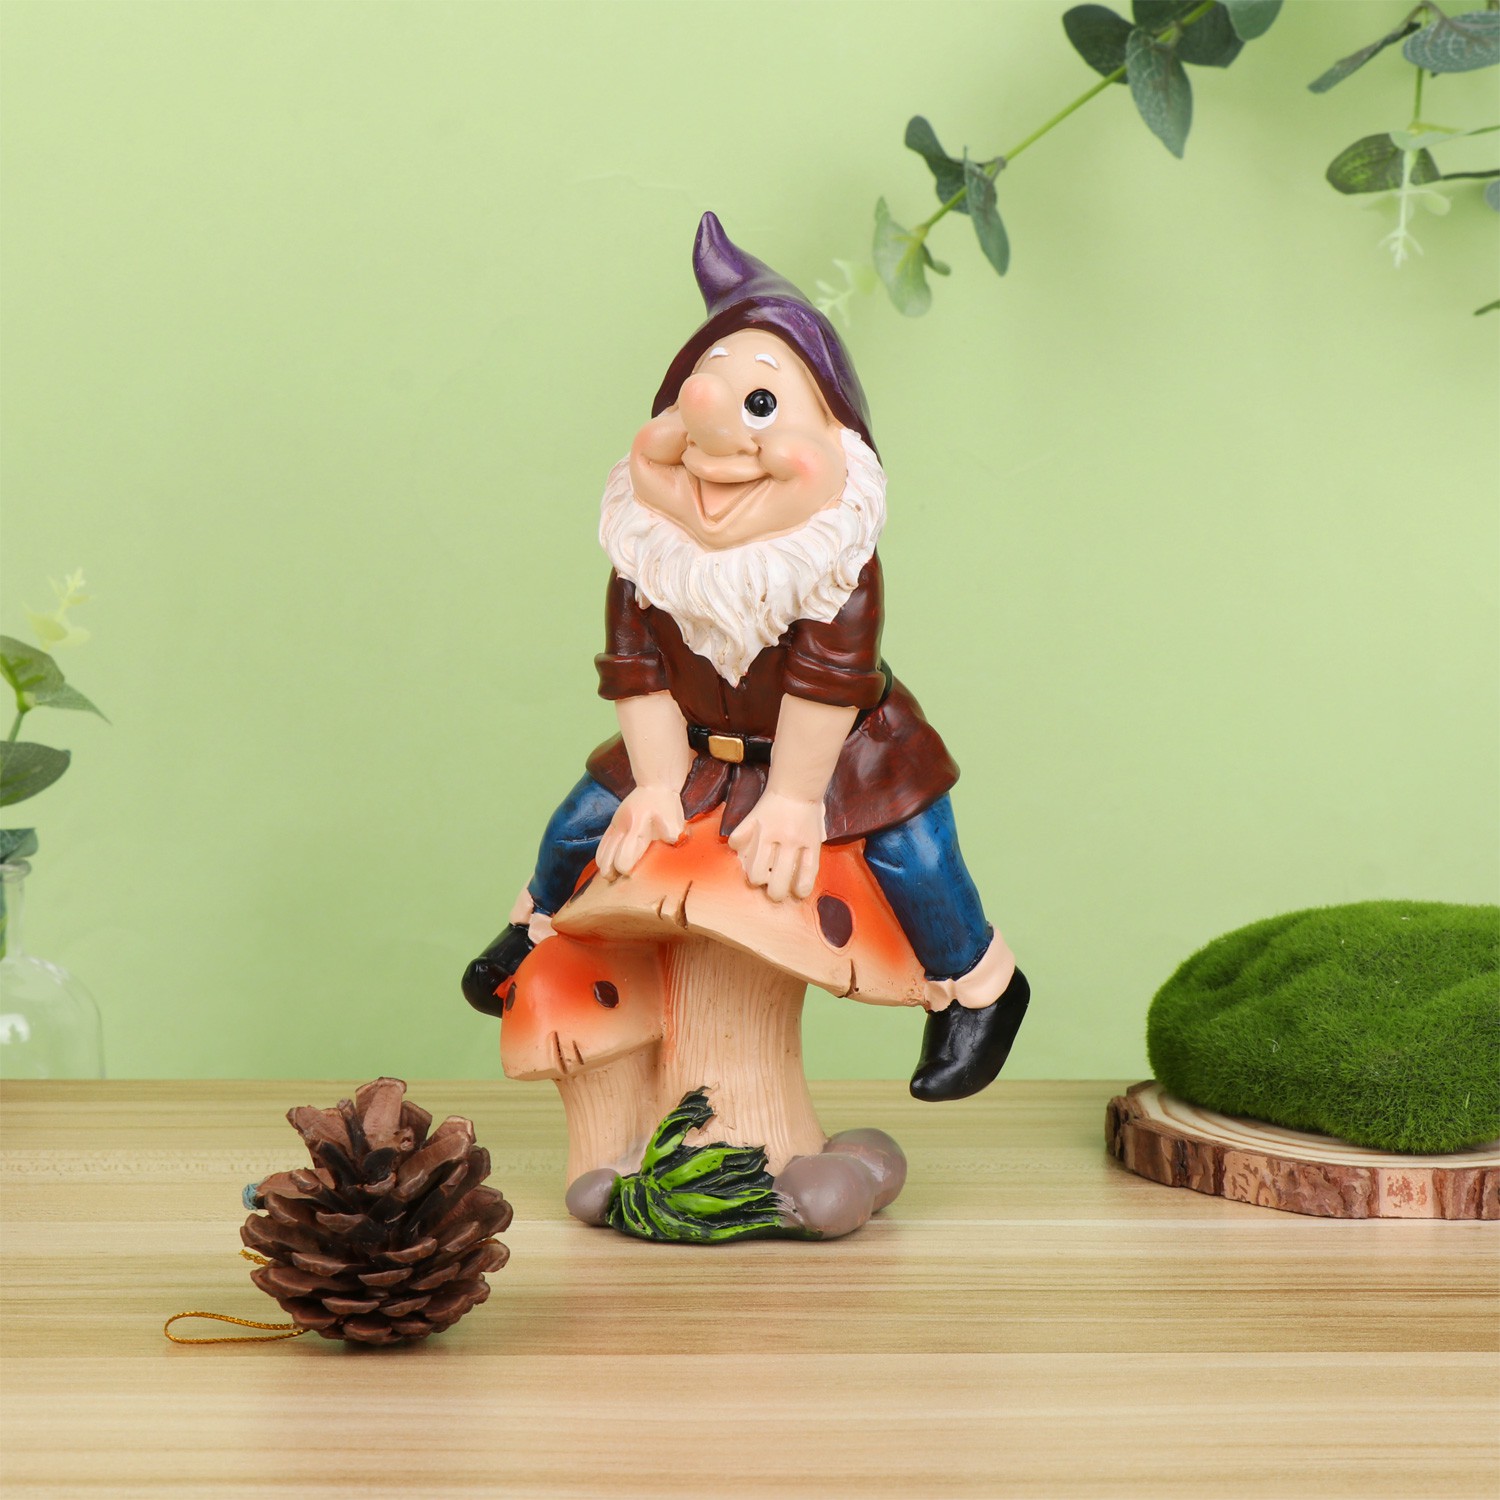 ☆YOLA☆ Cartoon Gnome Statue Outdoor Courtyard Sculpture Dwarf Ornament Garden Resin Funny Decoration Lawn Figurine